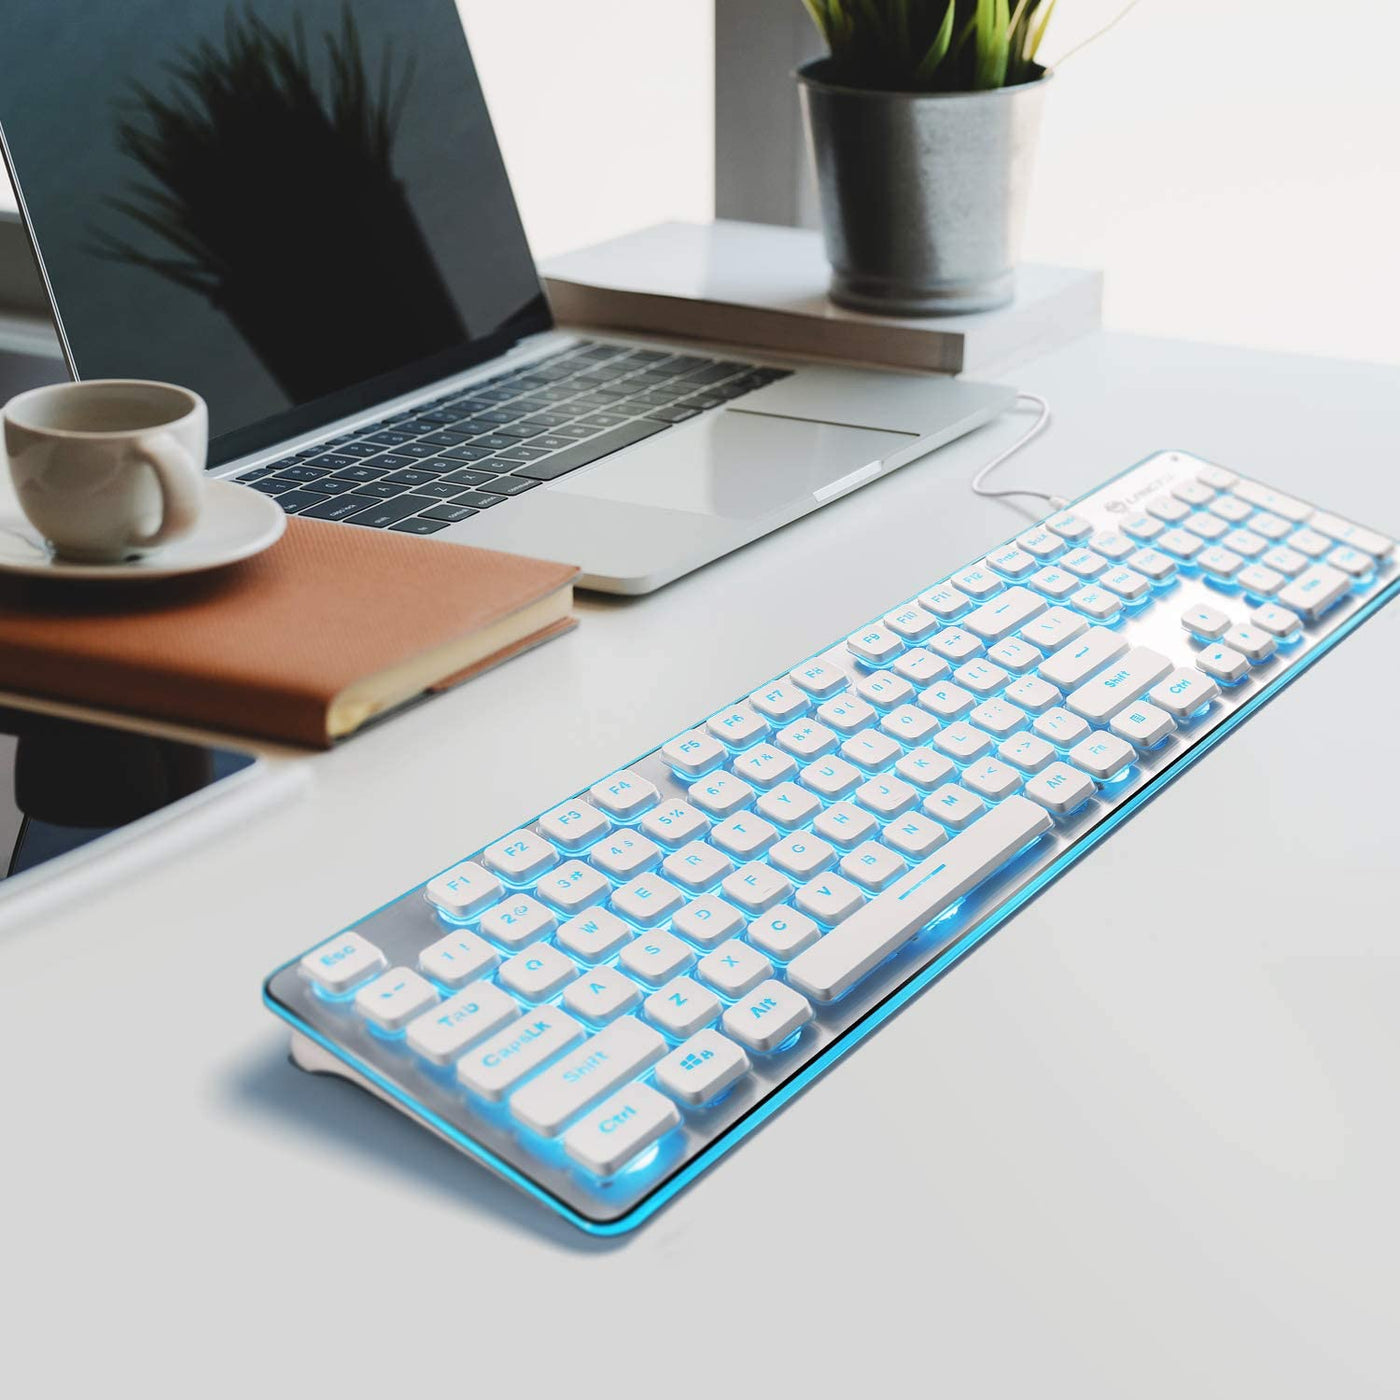 LANGTU L1 Ice Blue Backlit All Metal Panel 104-Key Anti-Ghosting Membrane Keyboard White/Silver - LANGTU Store